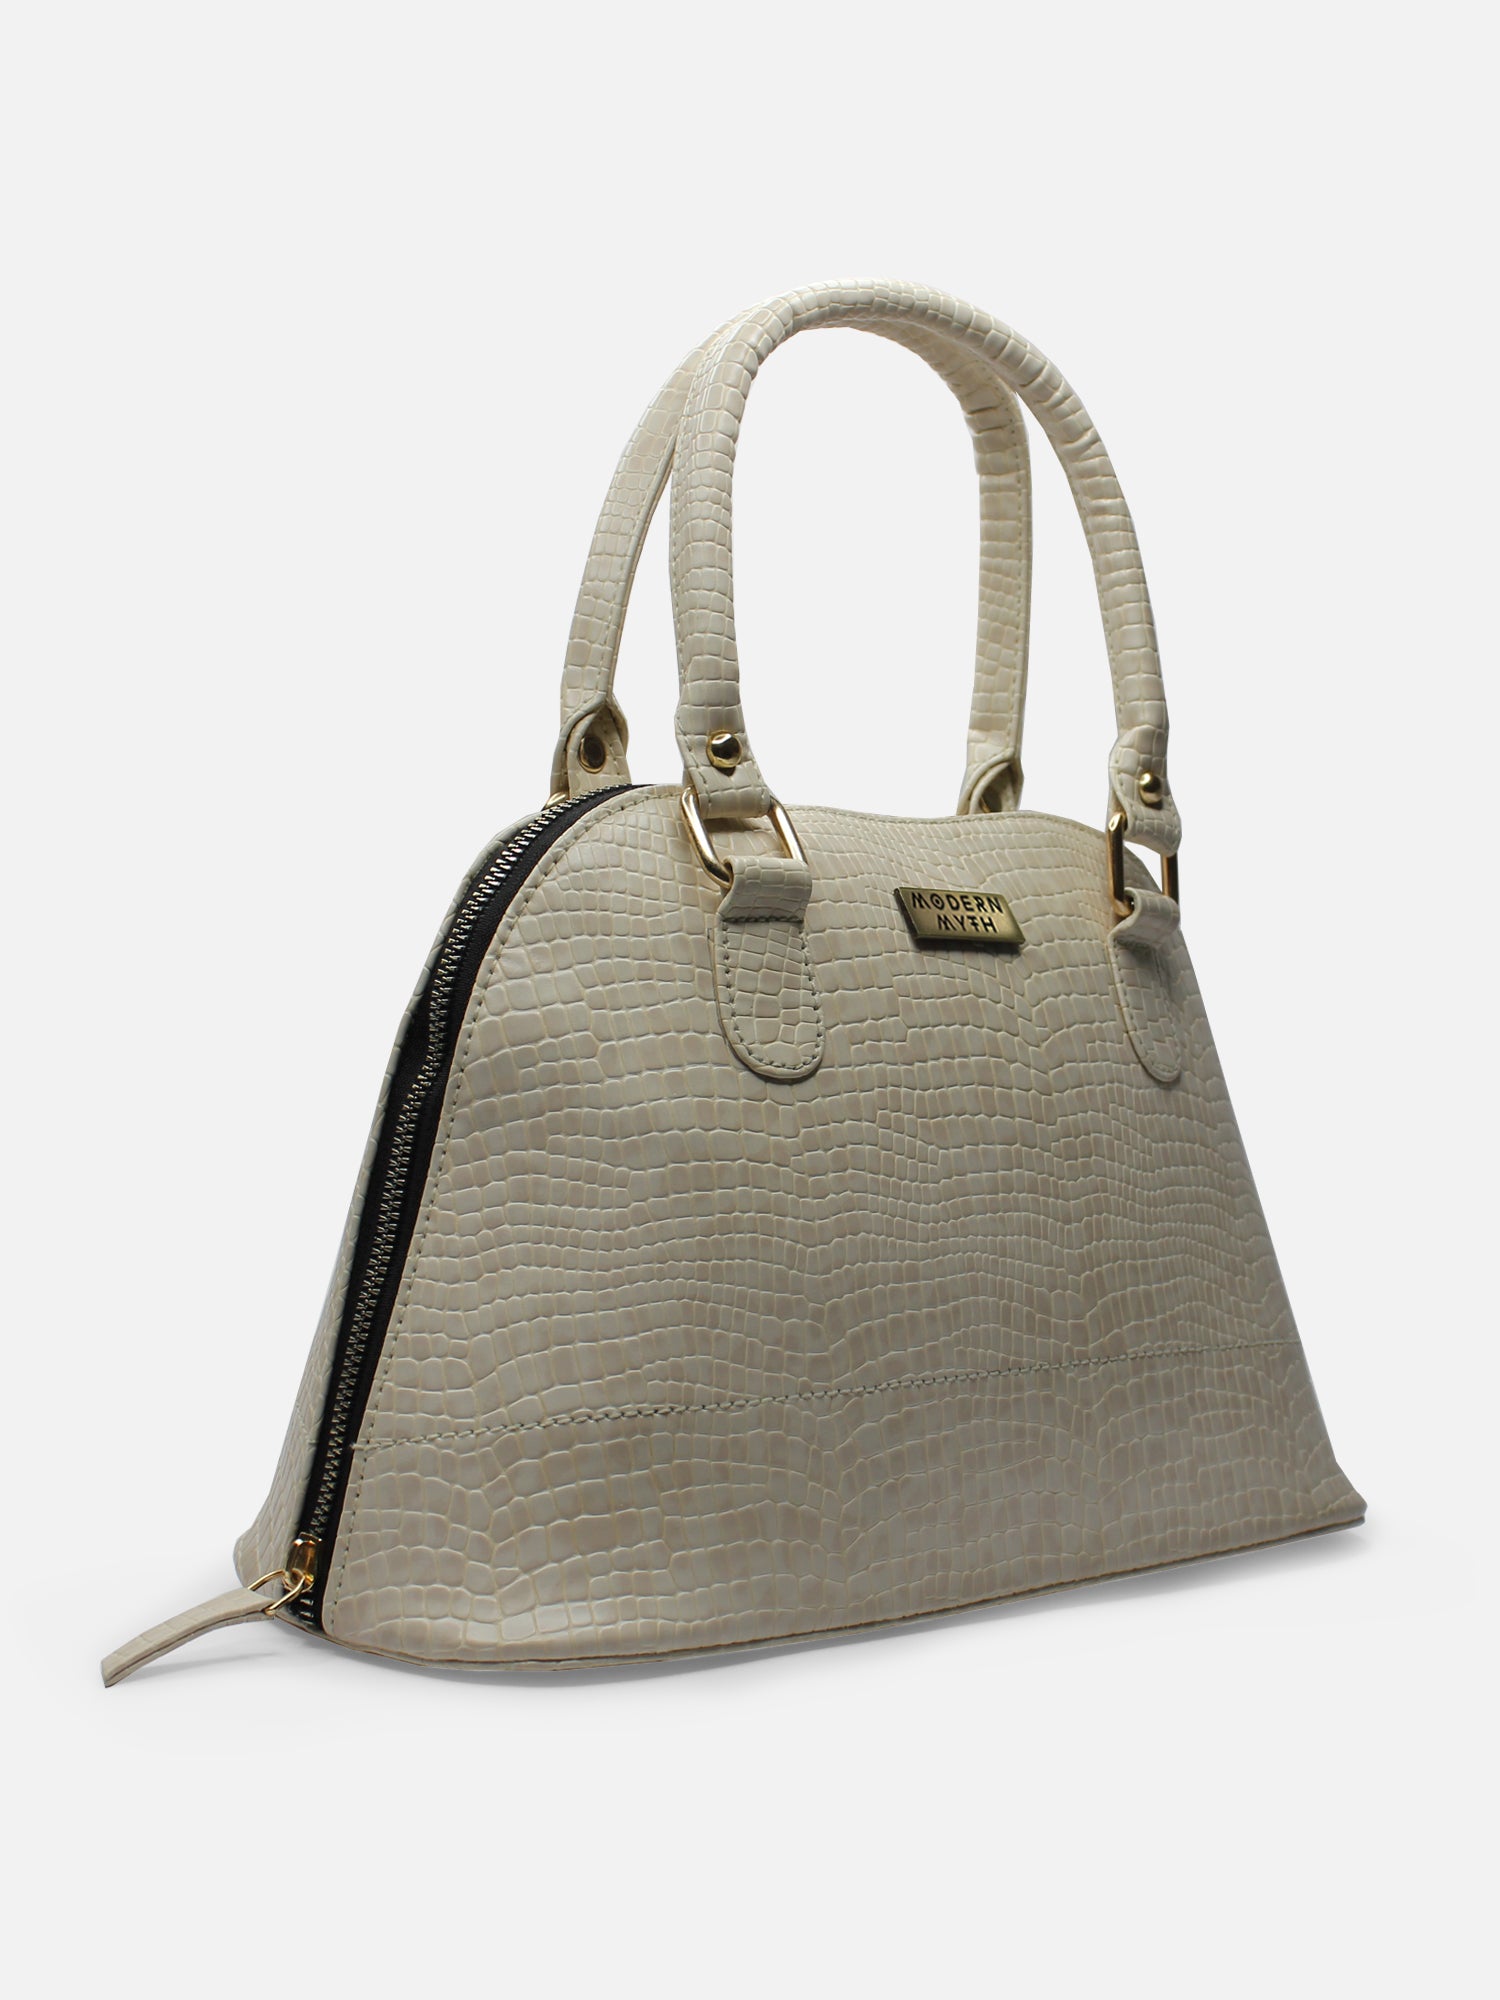 Designer Handbags That Every Woman Love to Buy